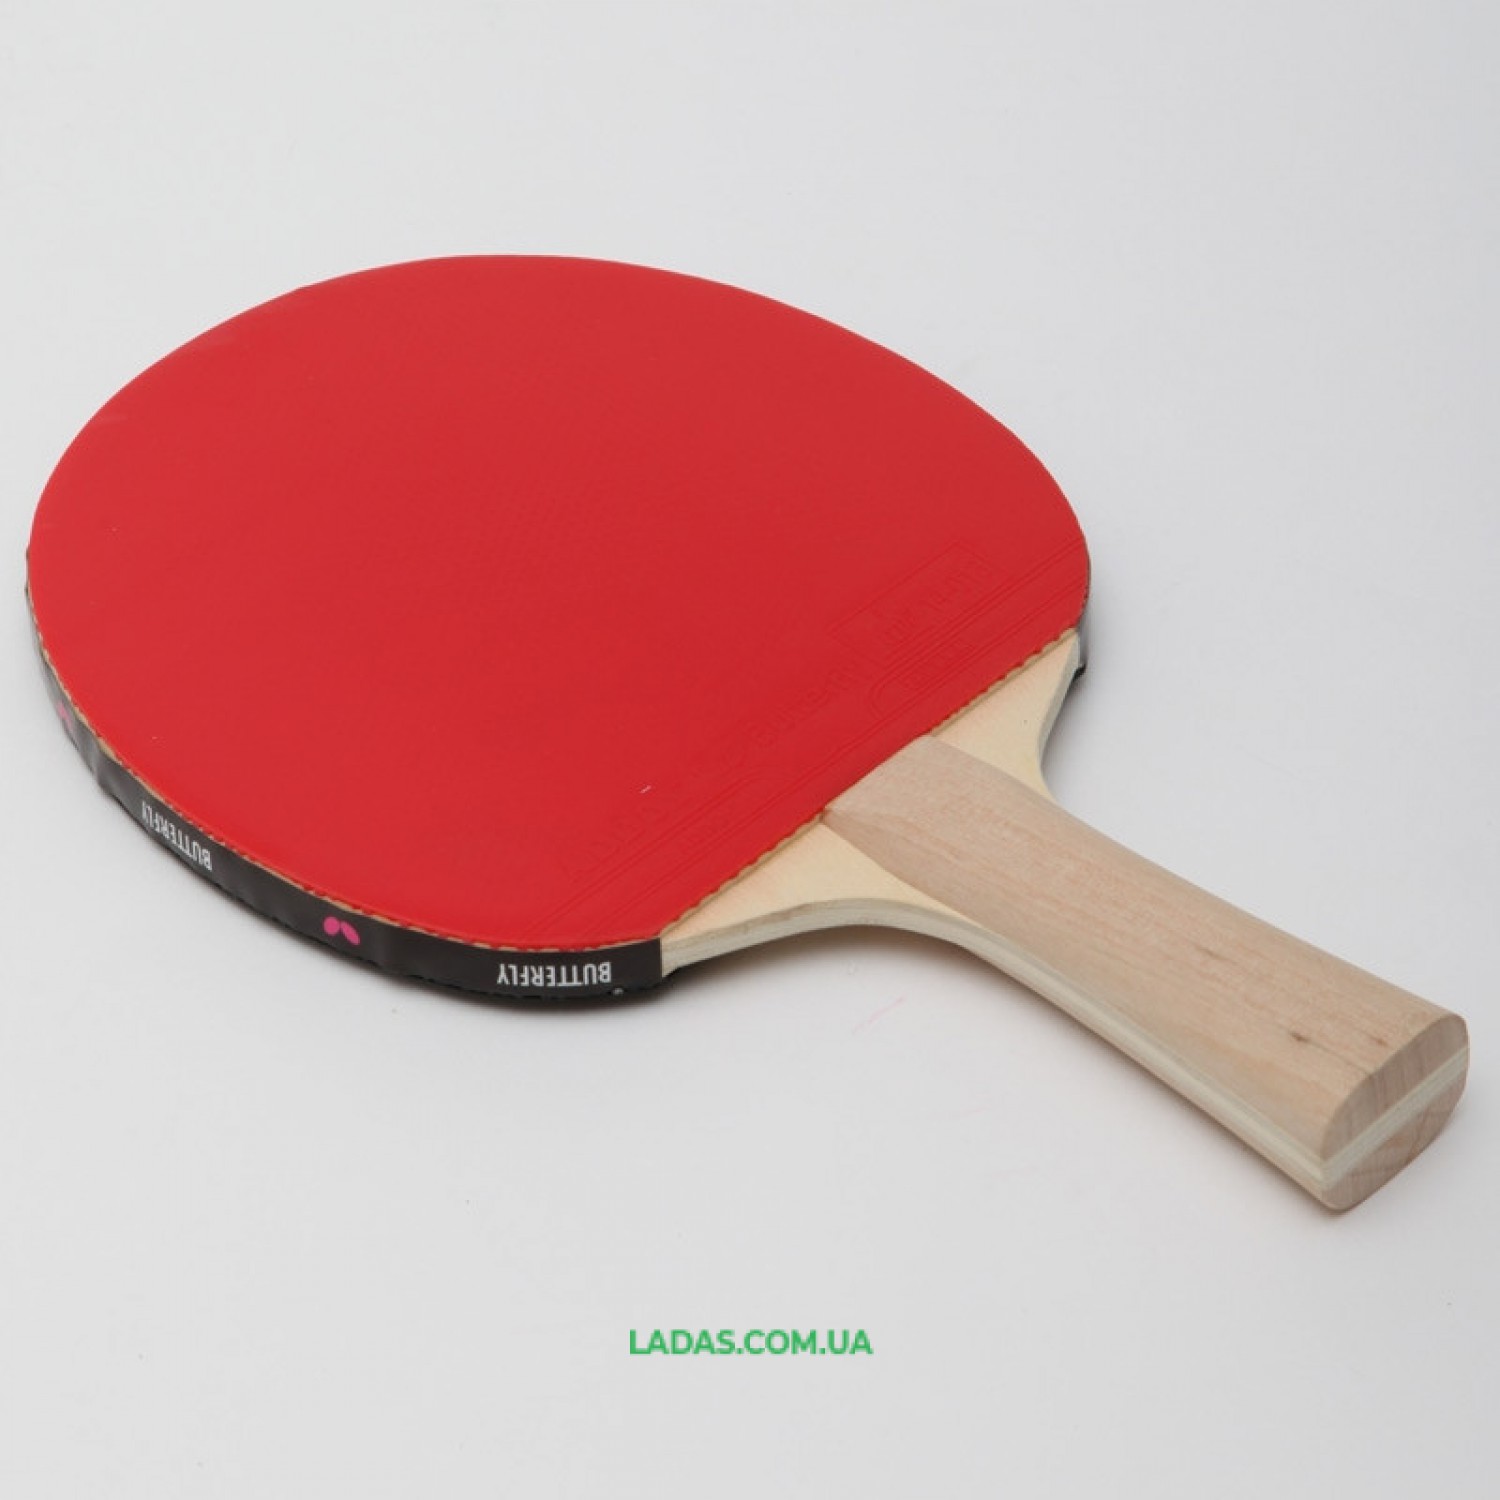 Набор для настольного тенниса 1 ракетка, 2 мяча с чехлом BUTTERFLY FREE YOUR LIFESTYLE Реплика